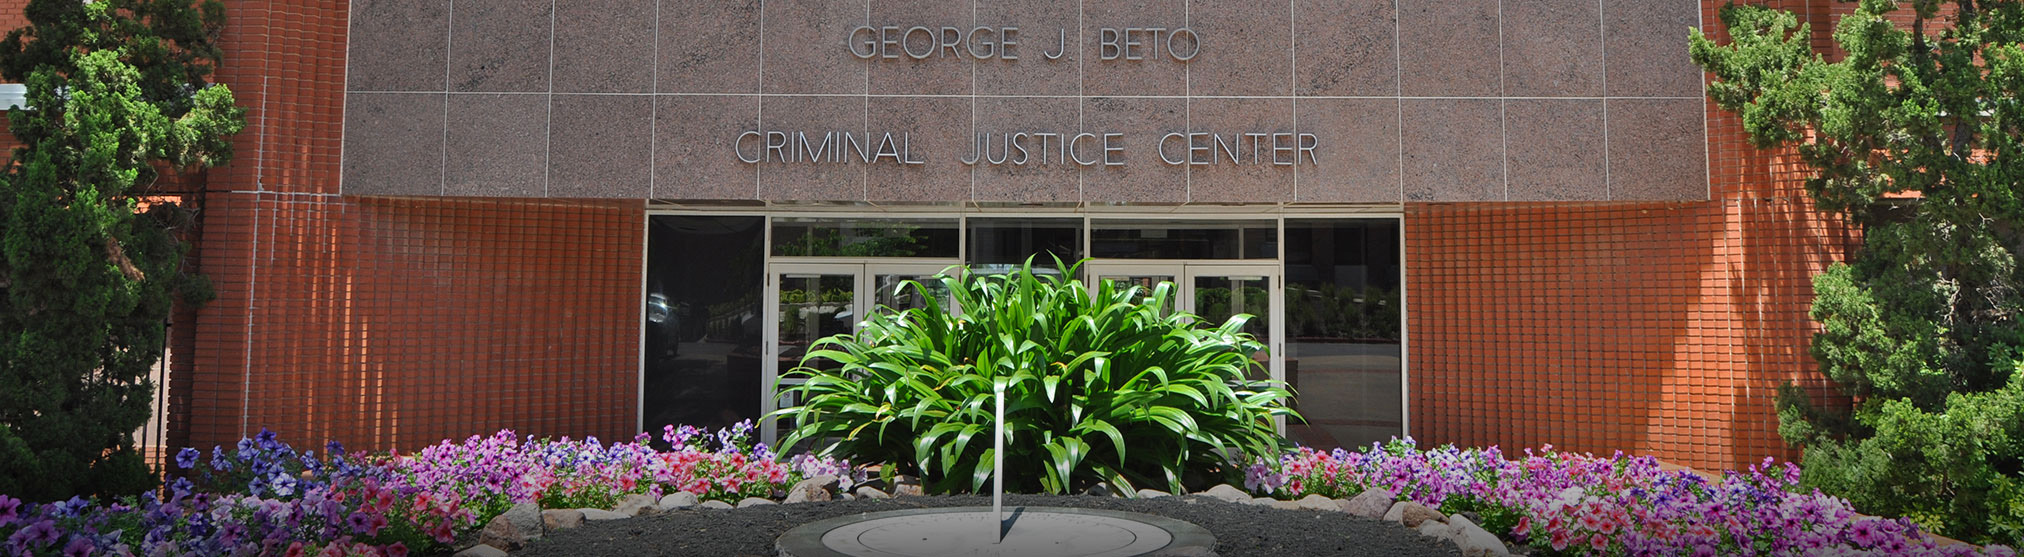 George J. Beto Criminal Justice Center